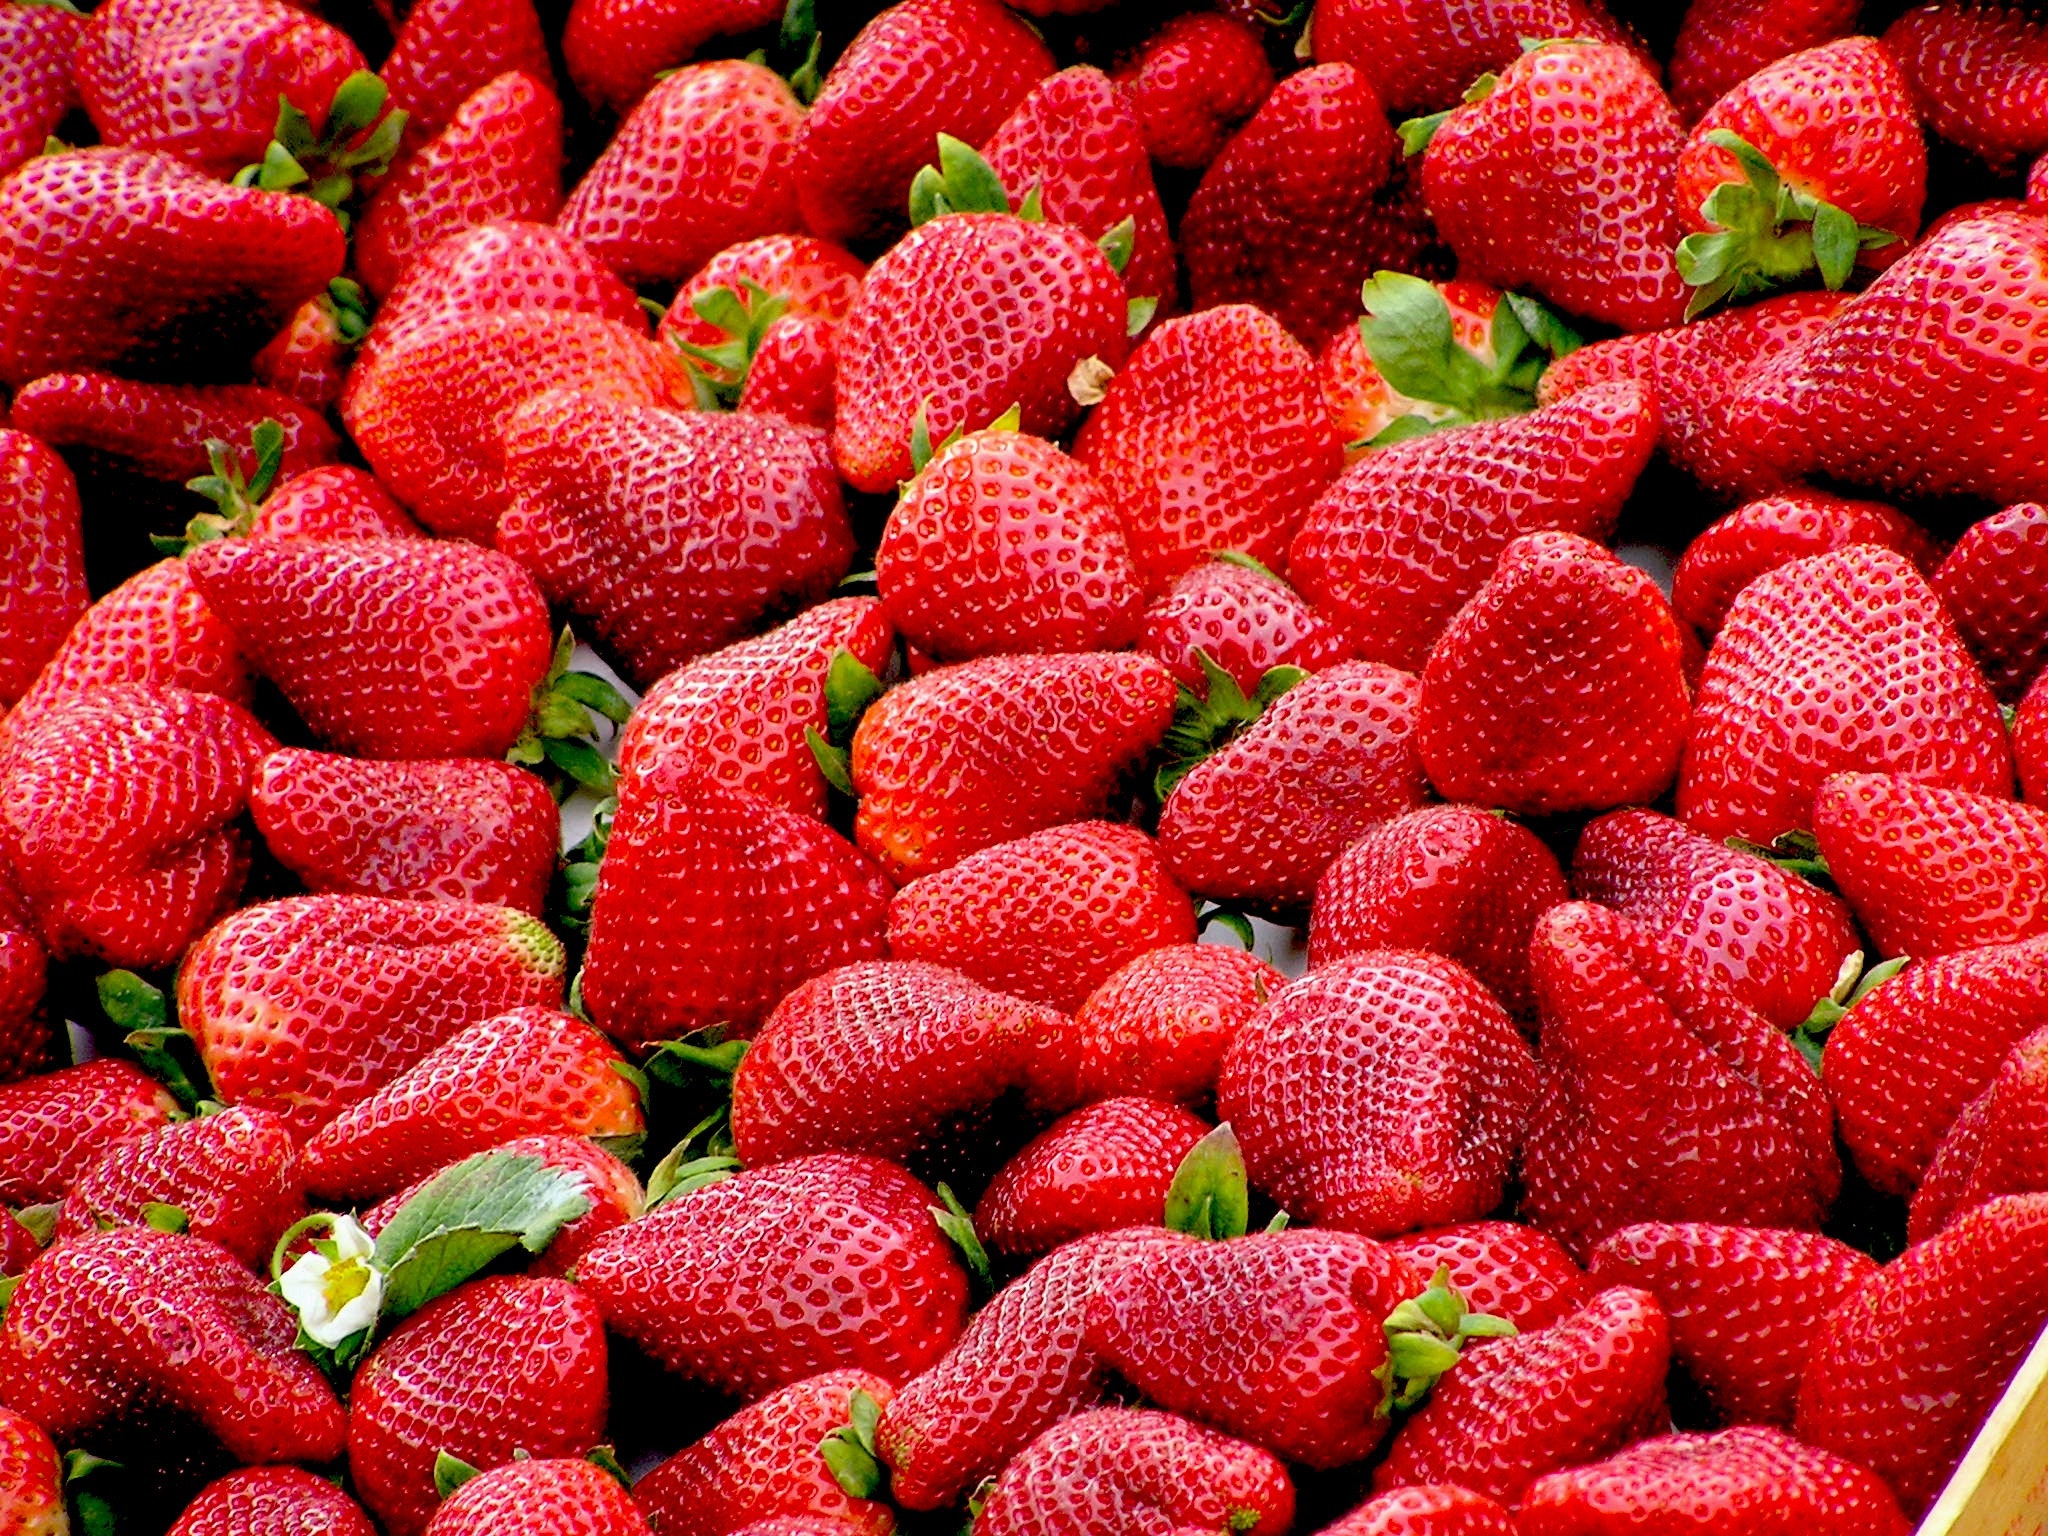 Strawberries fight depression